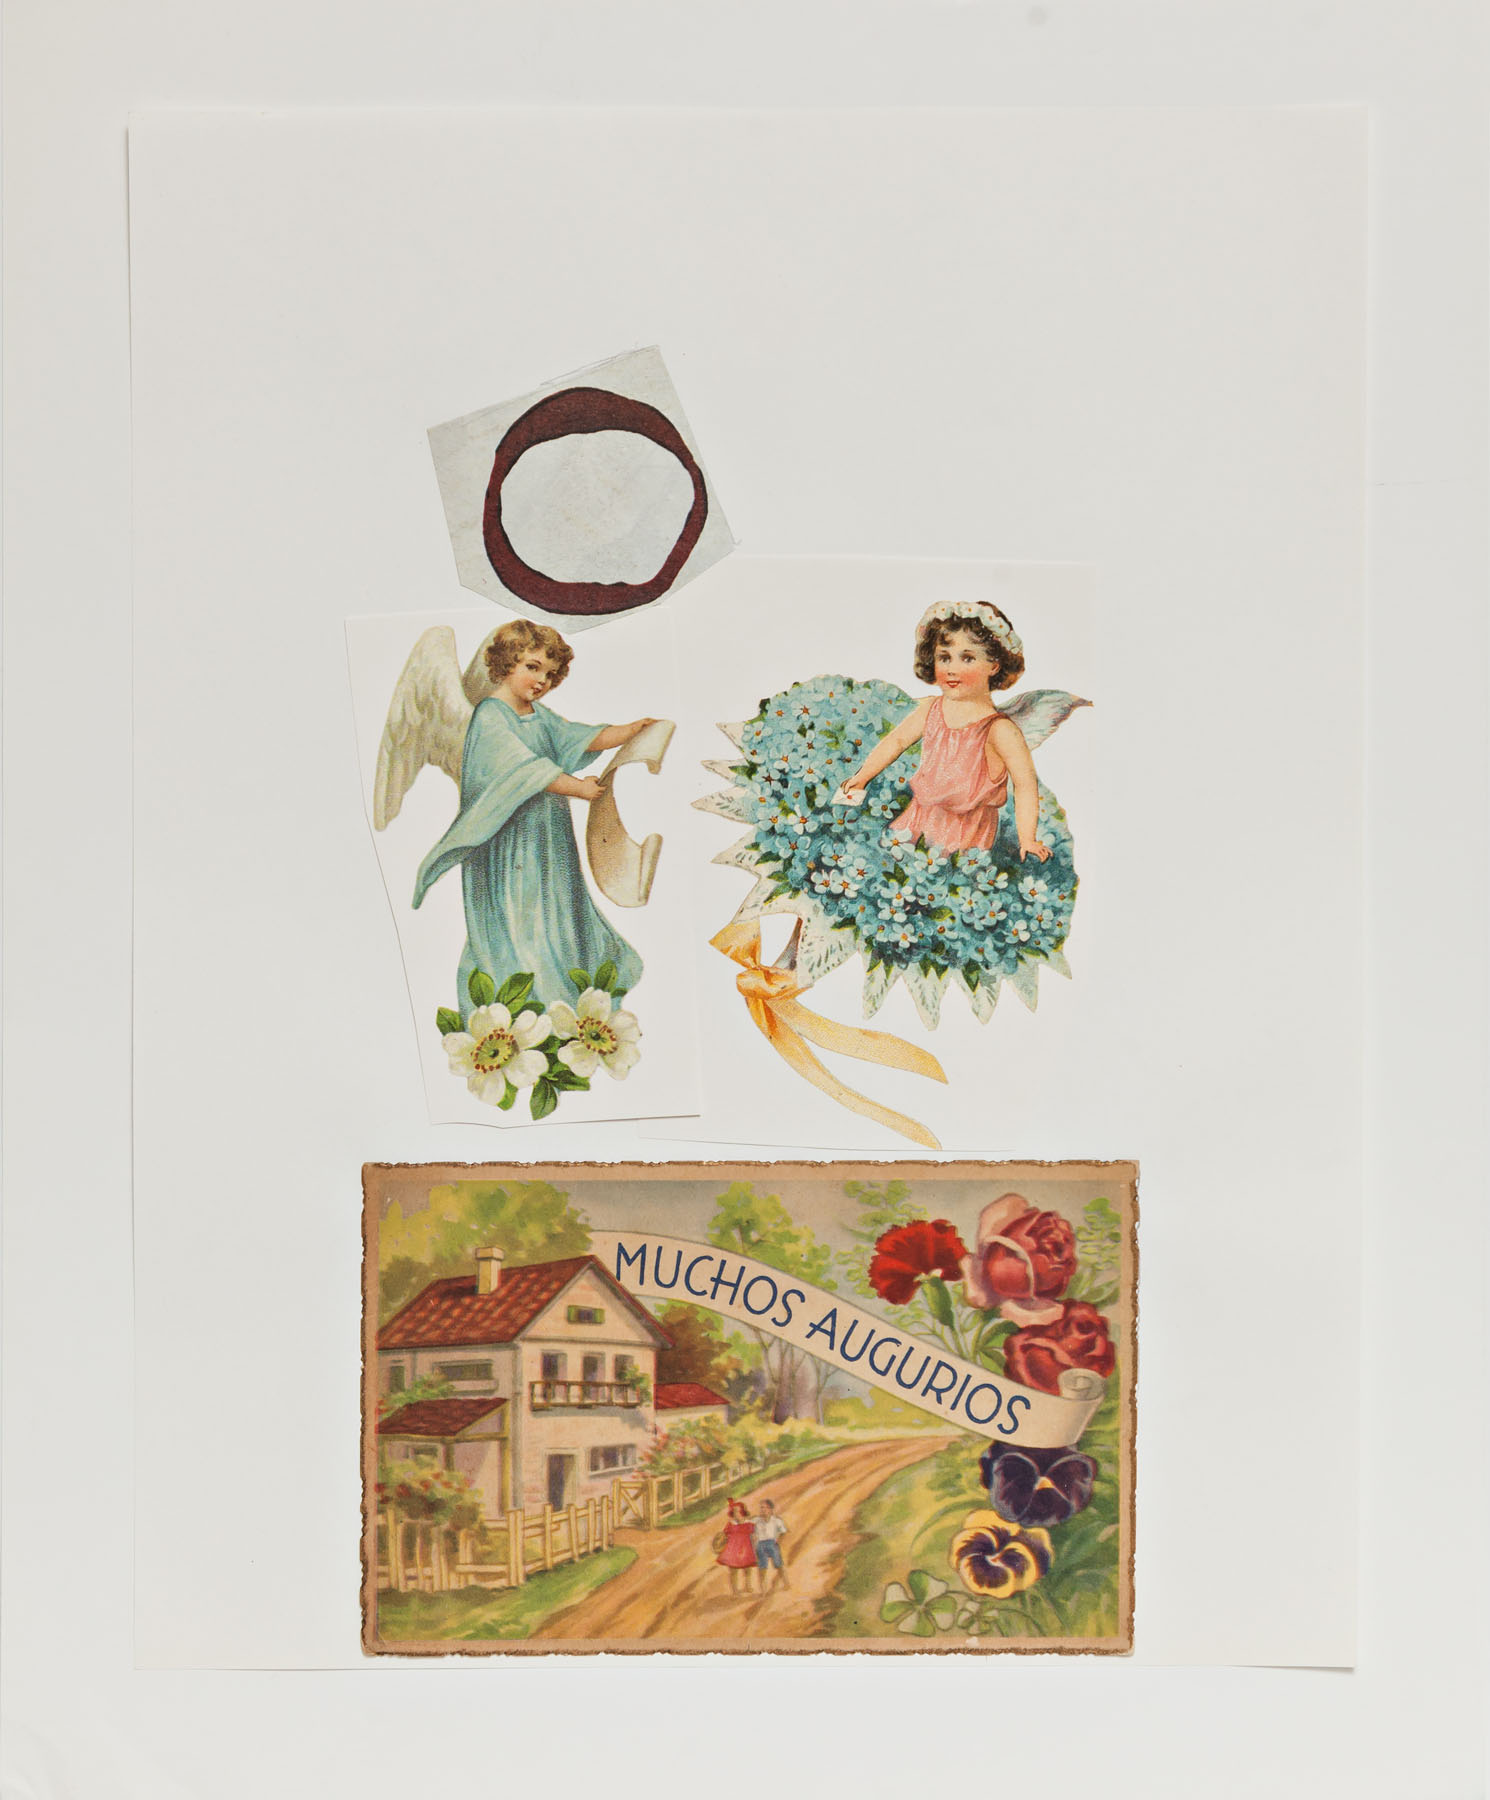 Serie Cuarentena, papel collage, 32,5 cm x 26,5 cm, 2020